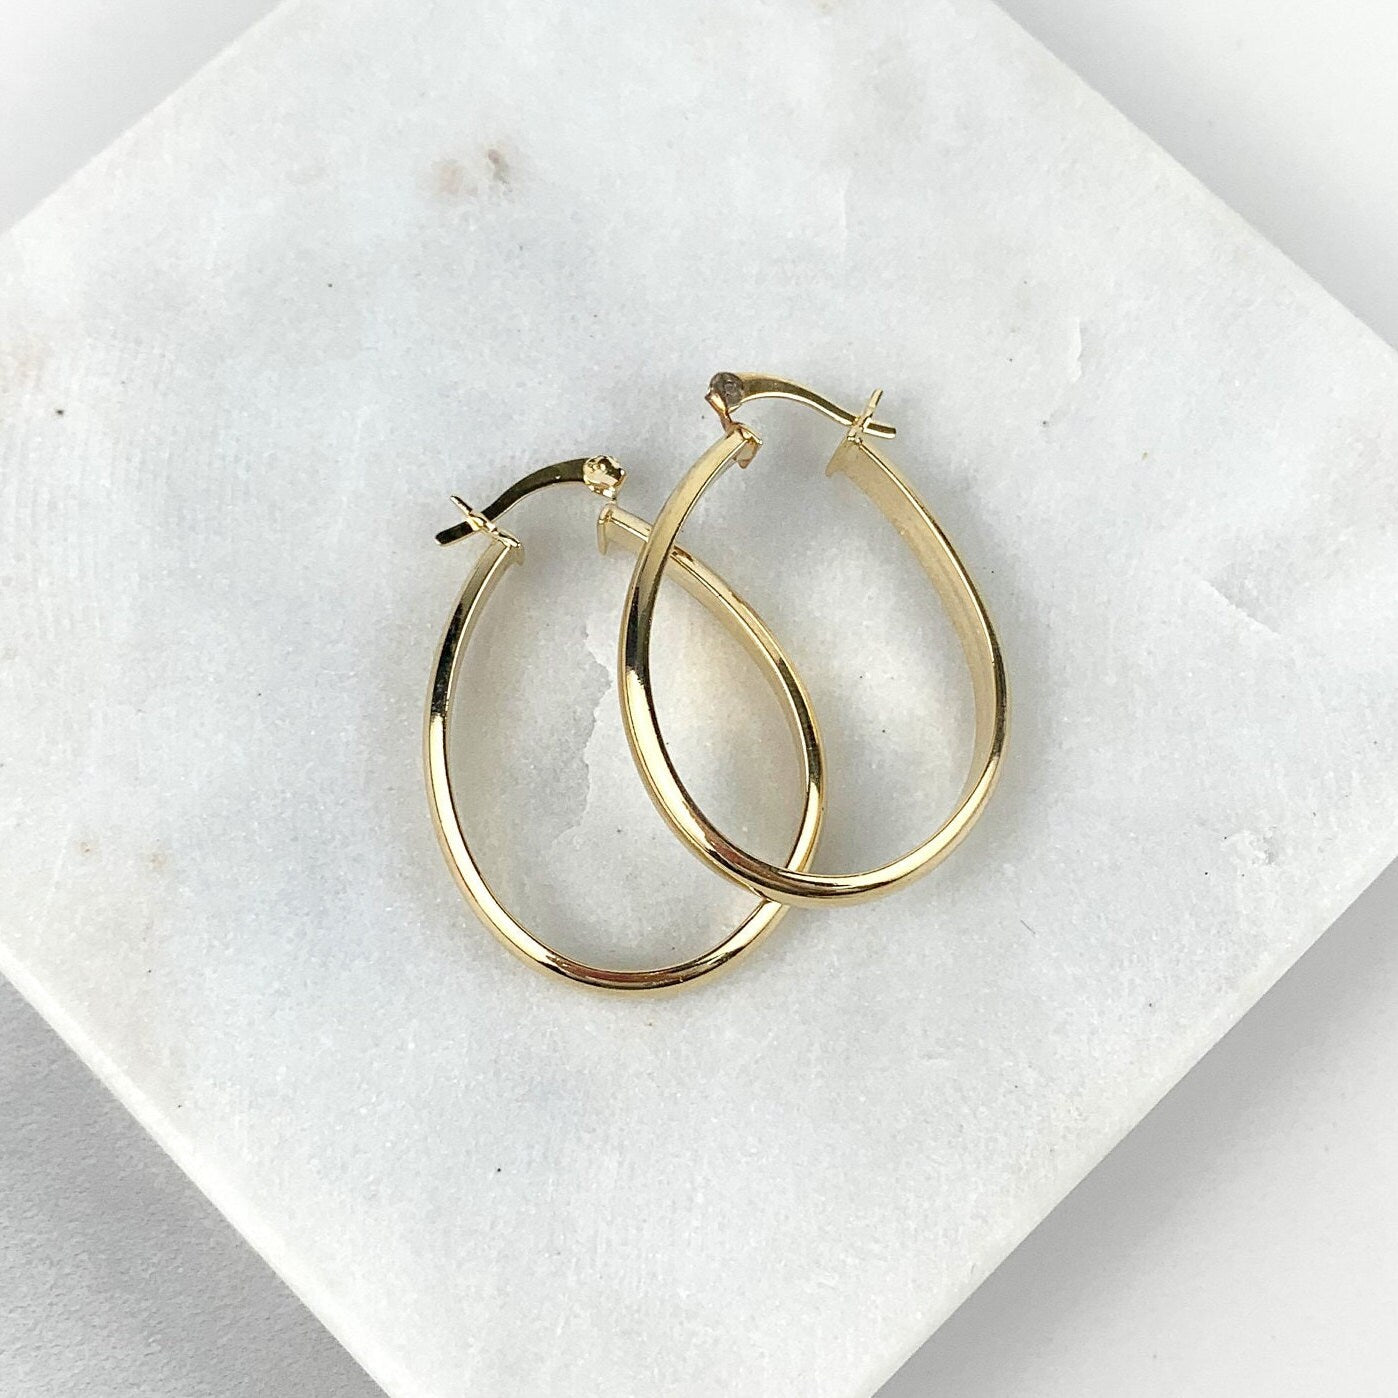 18k Gold Filled 26mm x 37mm Oval Hoop Earrings Wholesale Jewelry Making Supplies